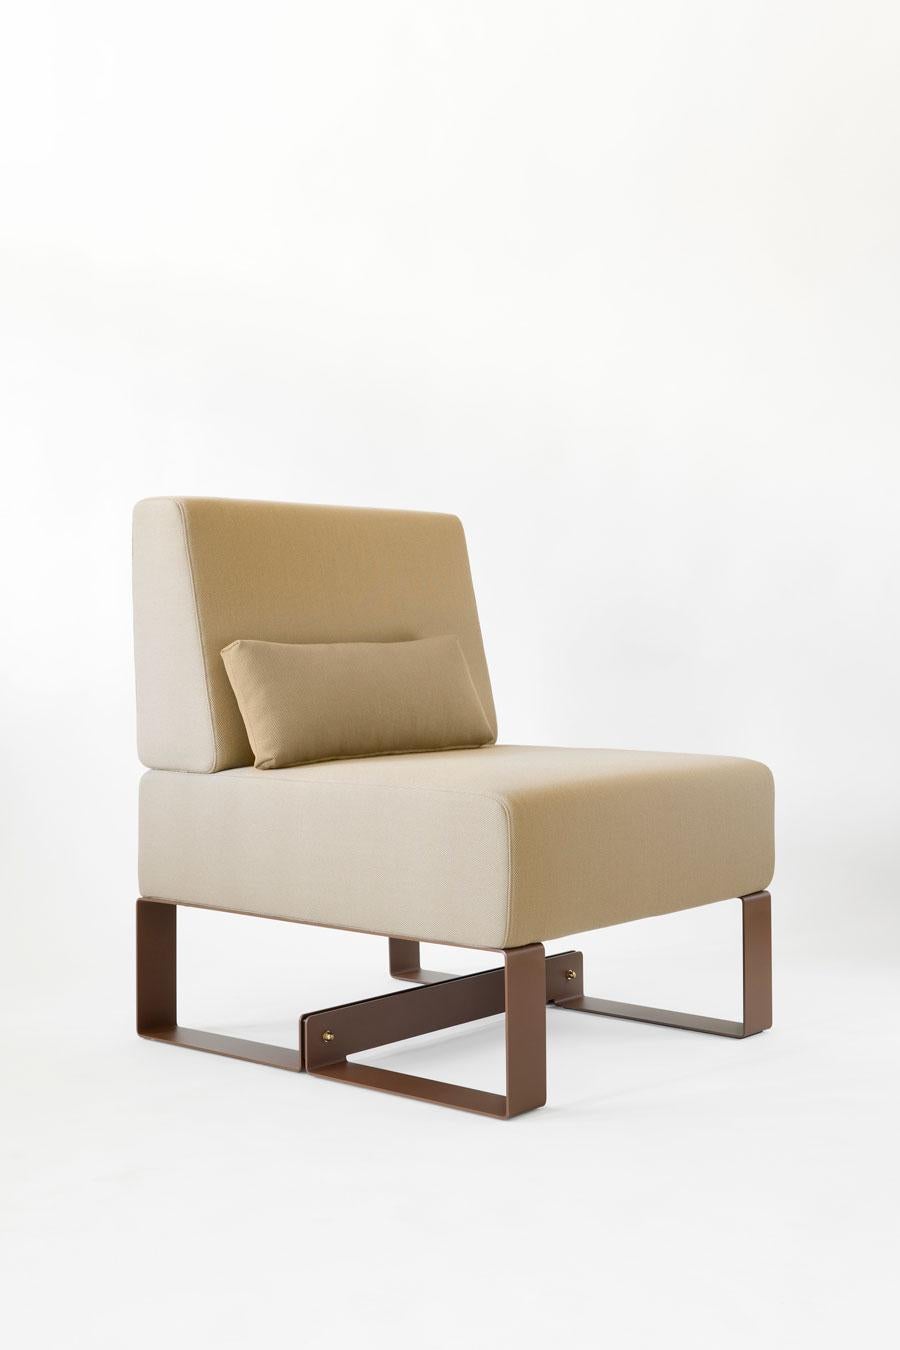 Adolfo Abejon Contemporary 'Cubit' Brown Sculptural Easy Chair 2